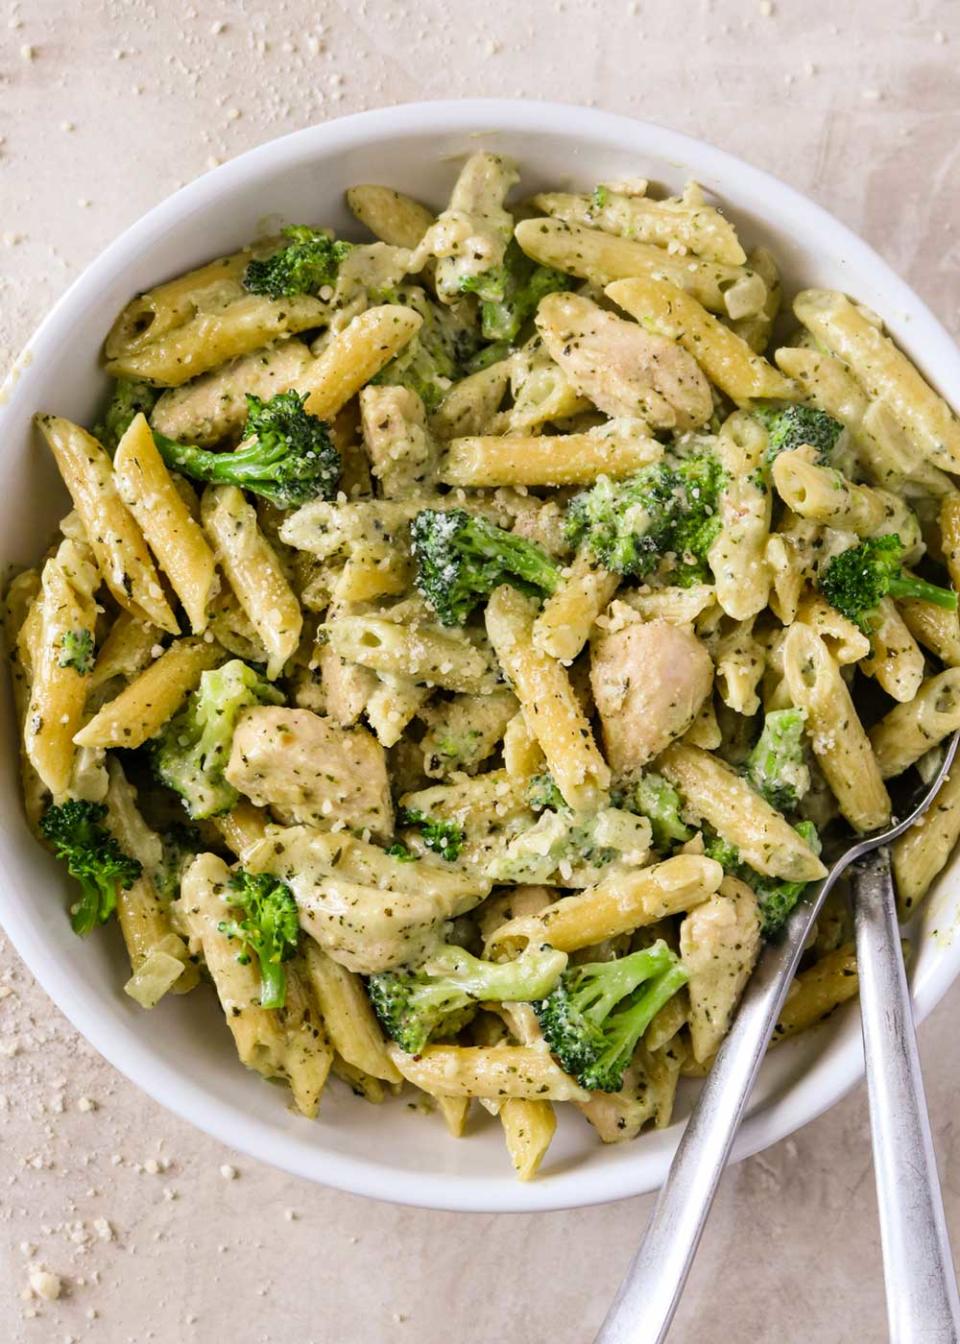 <a href="https://gimmedelicious.com/pesto-chicken-and-broccoli-pasta/">Pesto, Chicken, and Broccoli Pasta</a> from <a href="https://gimmedelicious.com">Gimme Delicious</a>